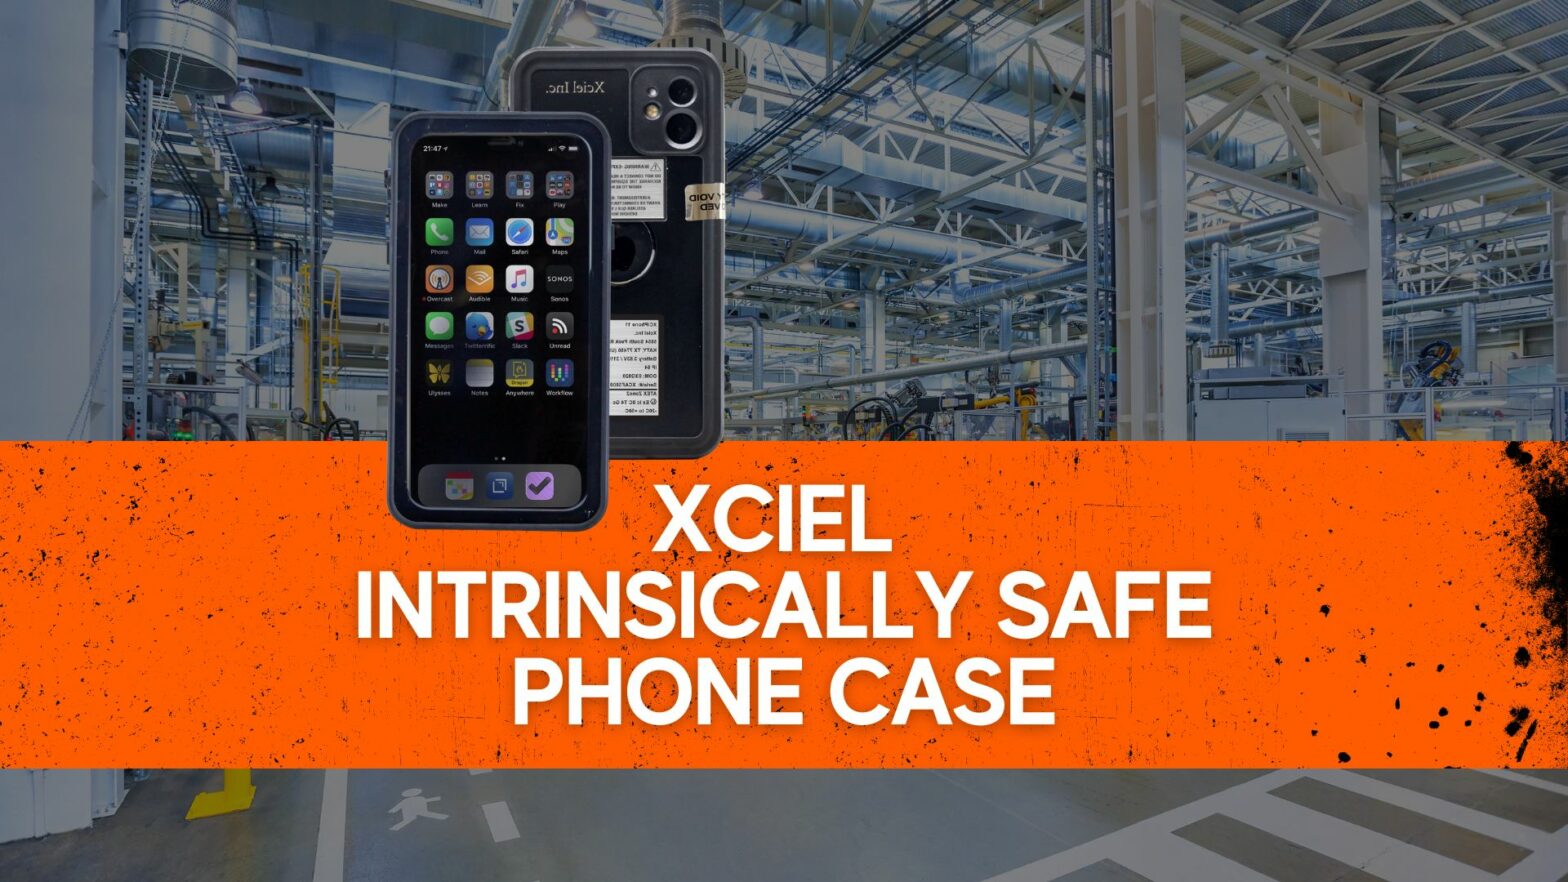 Xciel Intrinsically safe phone case